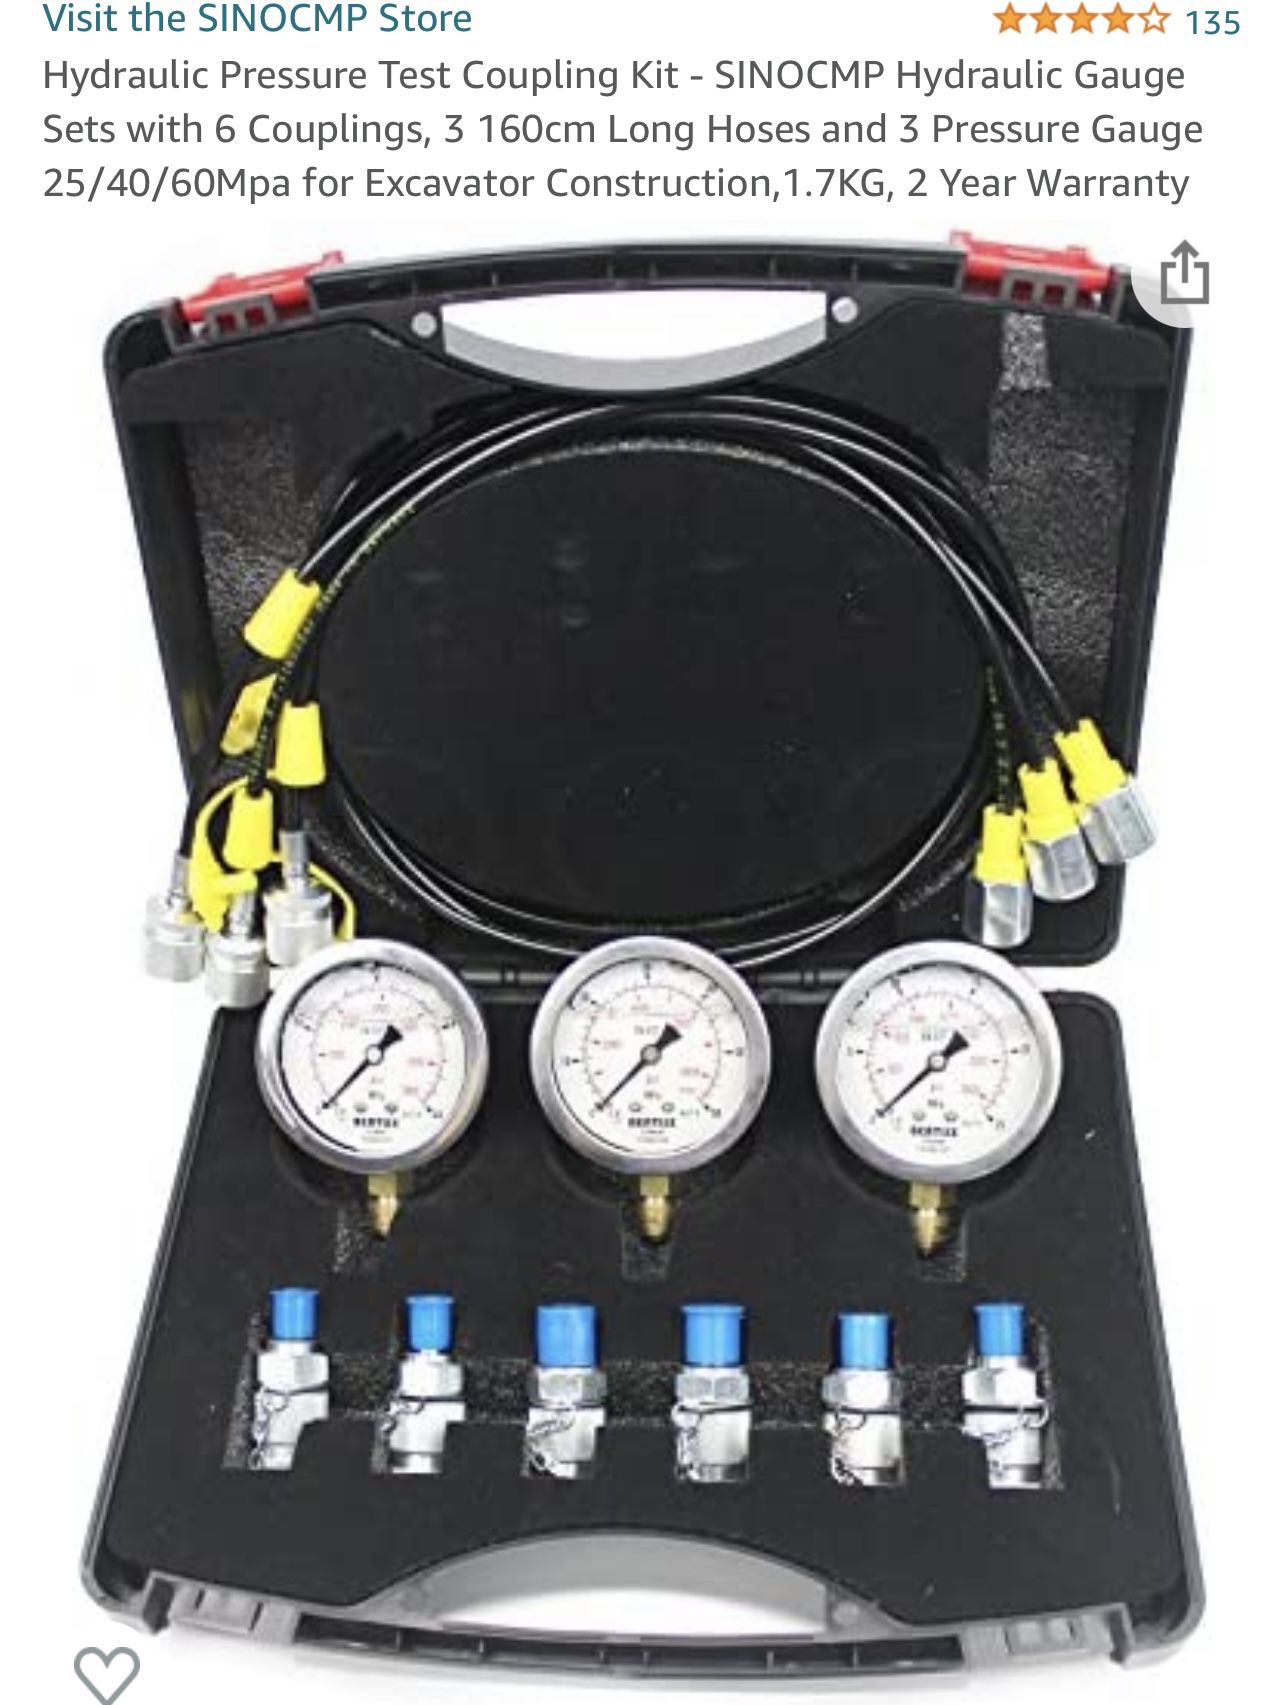 Hydralic Pressure Test Coupling Kit 